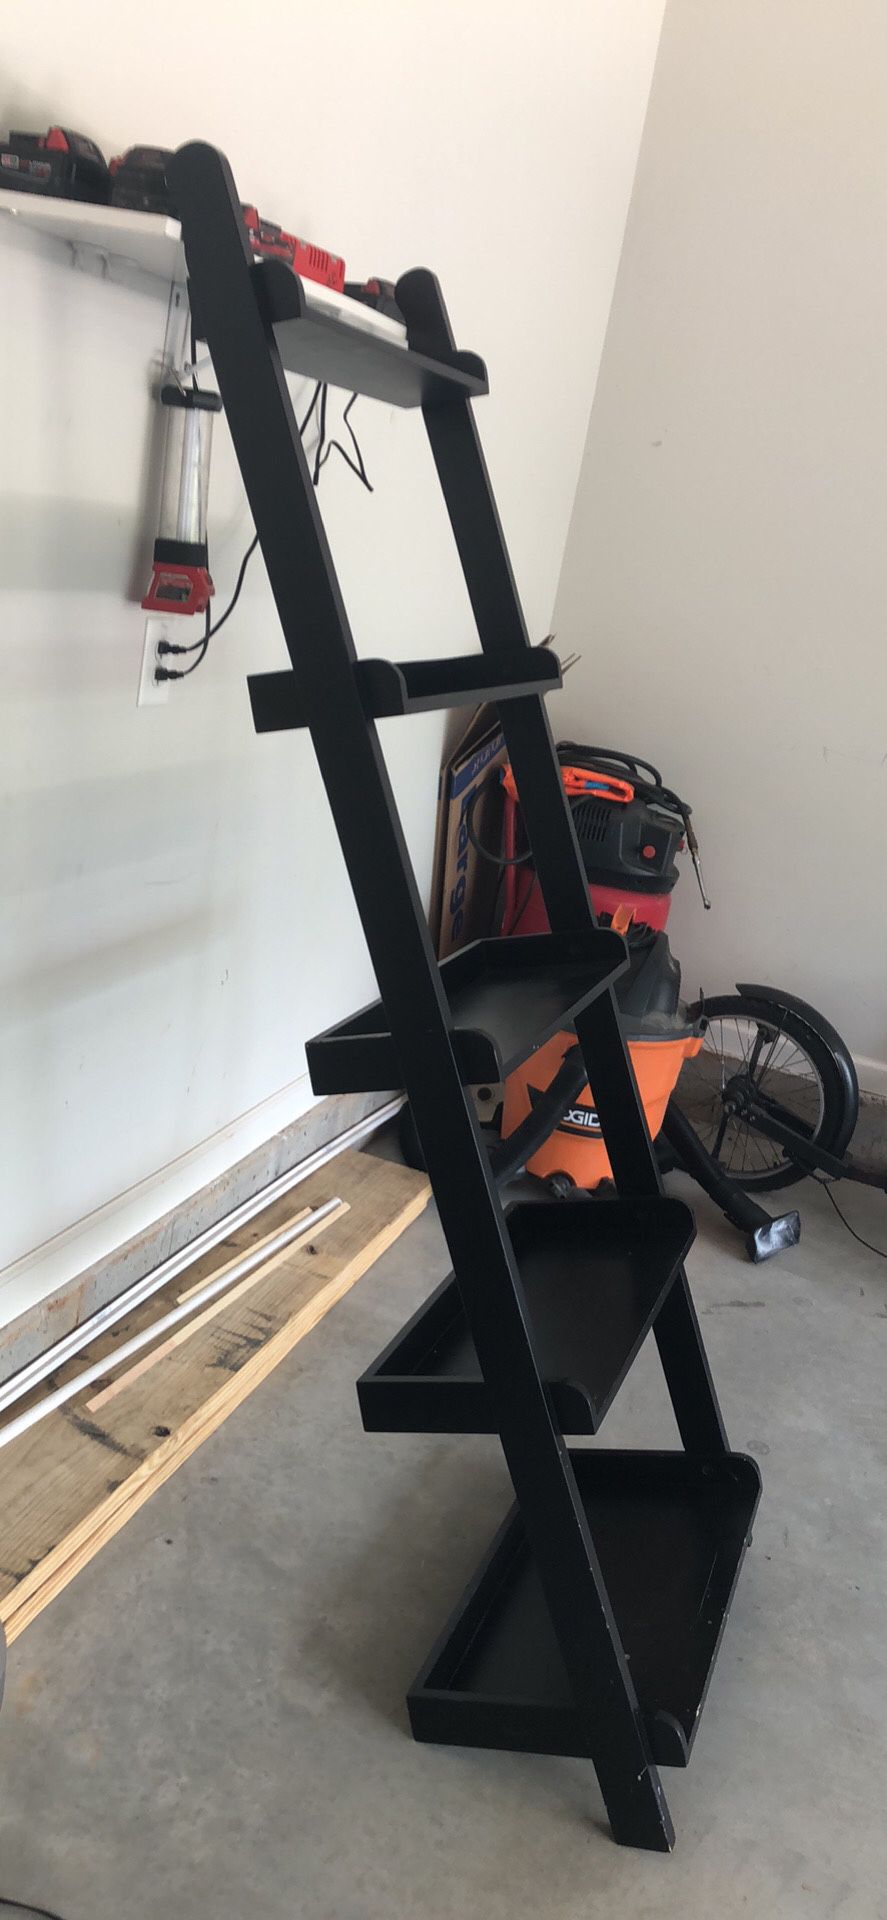 Black ladder shelf